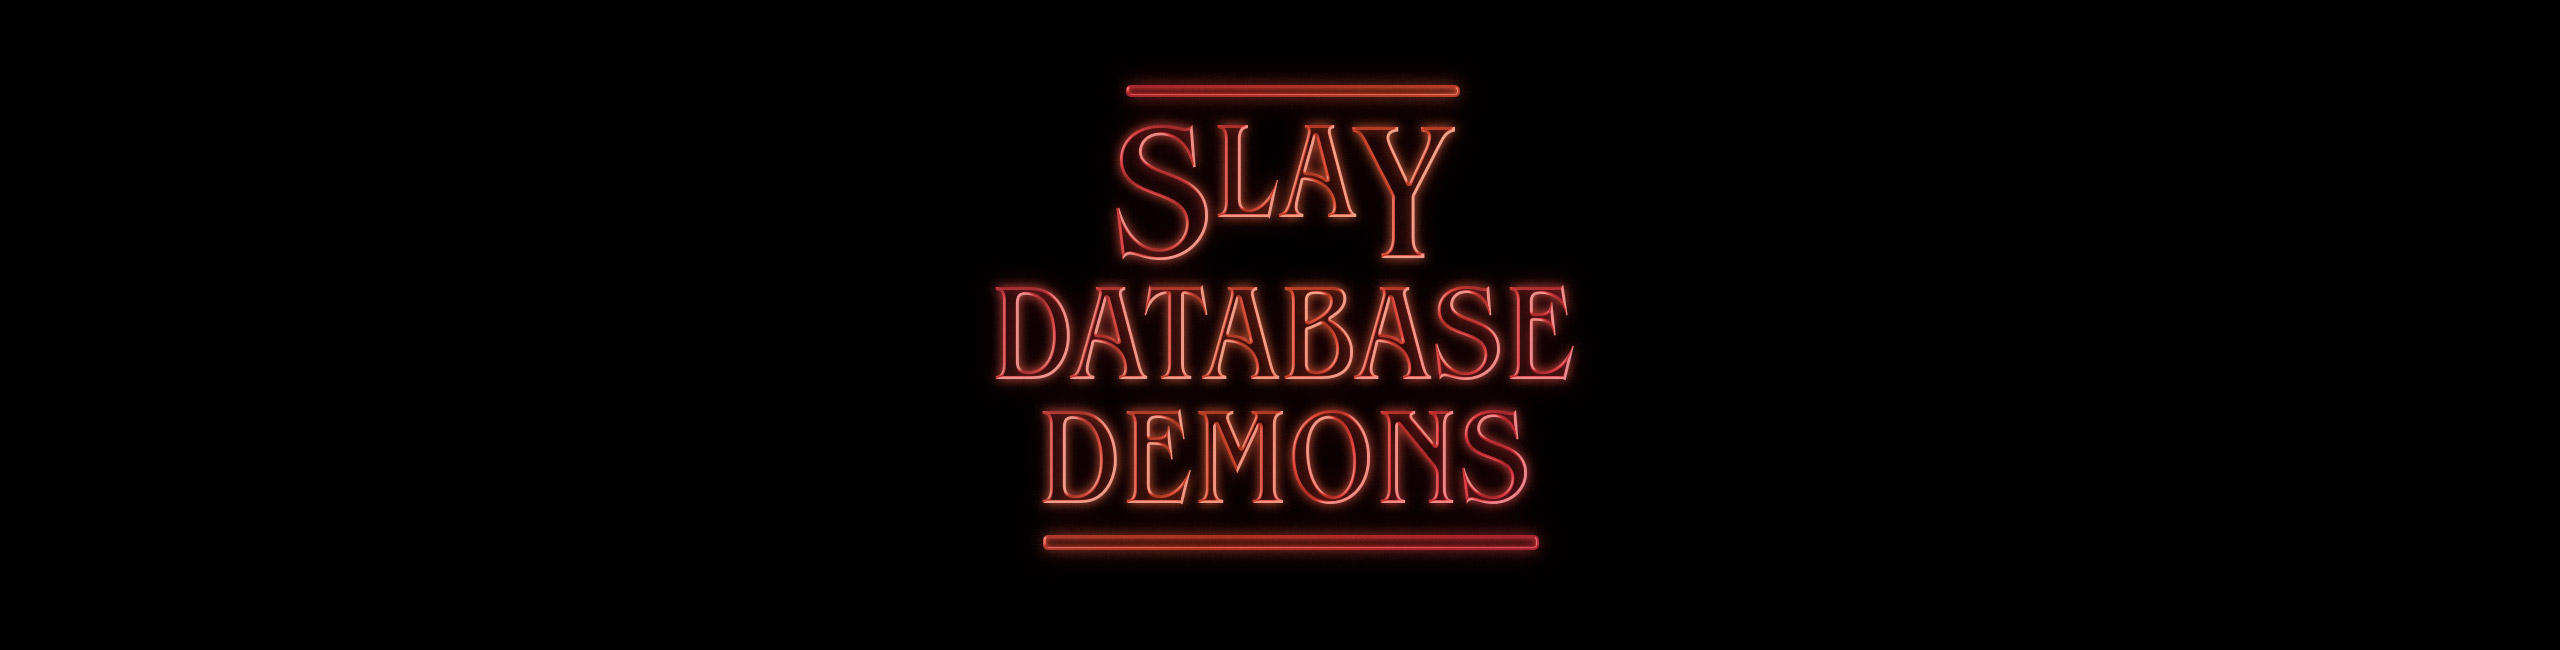 Slay Database Demons